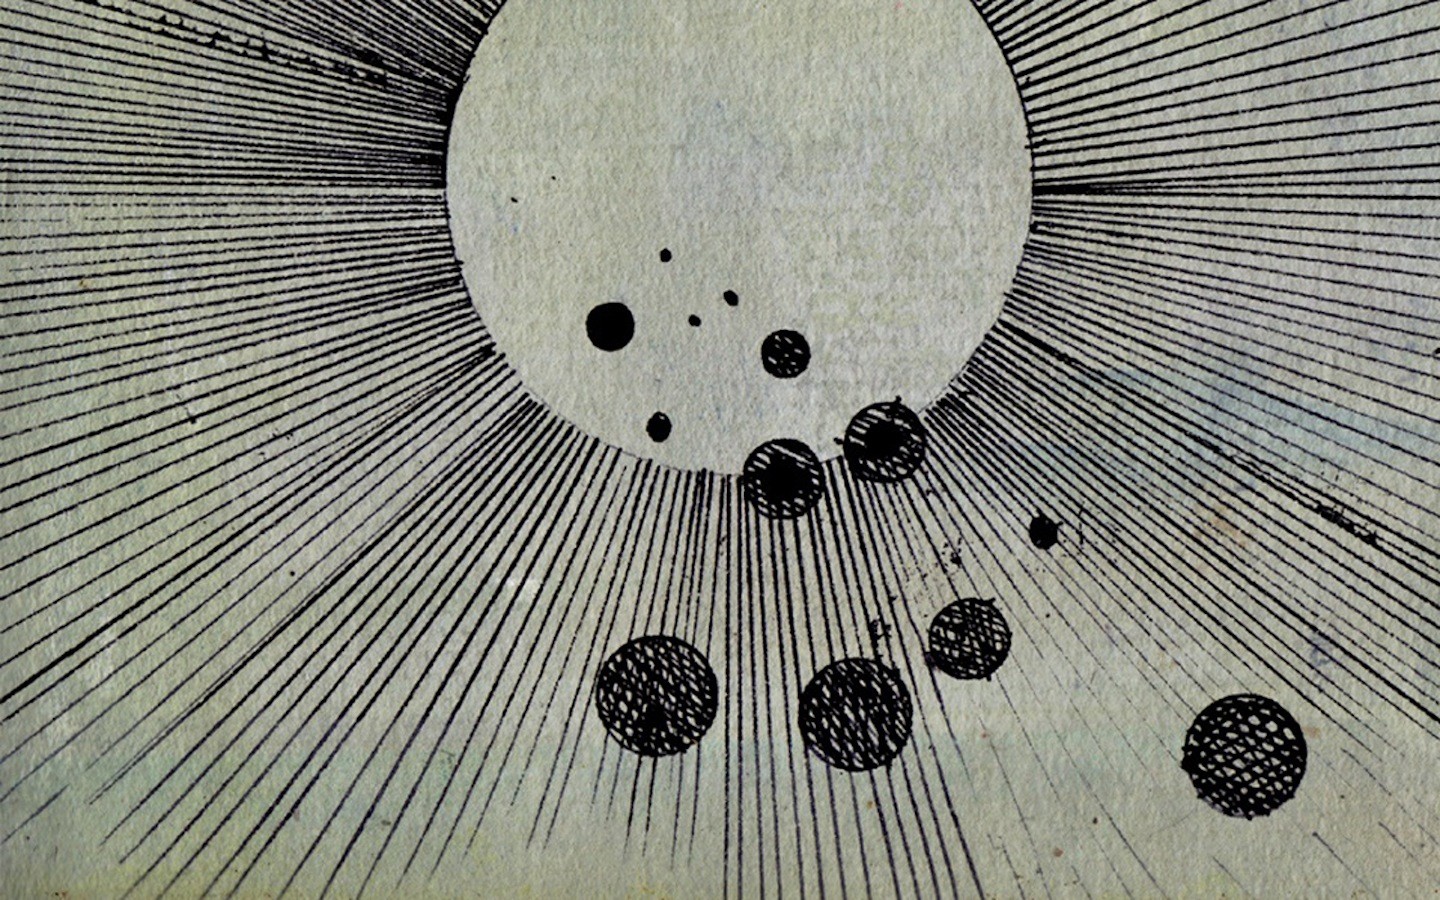 General 1440x900 music Flying Lotus monochrome Sun lines sphere